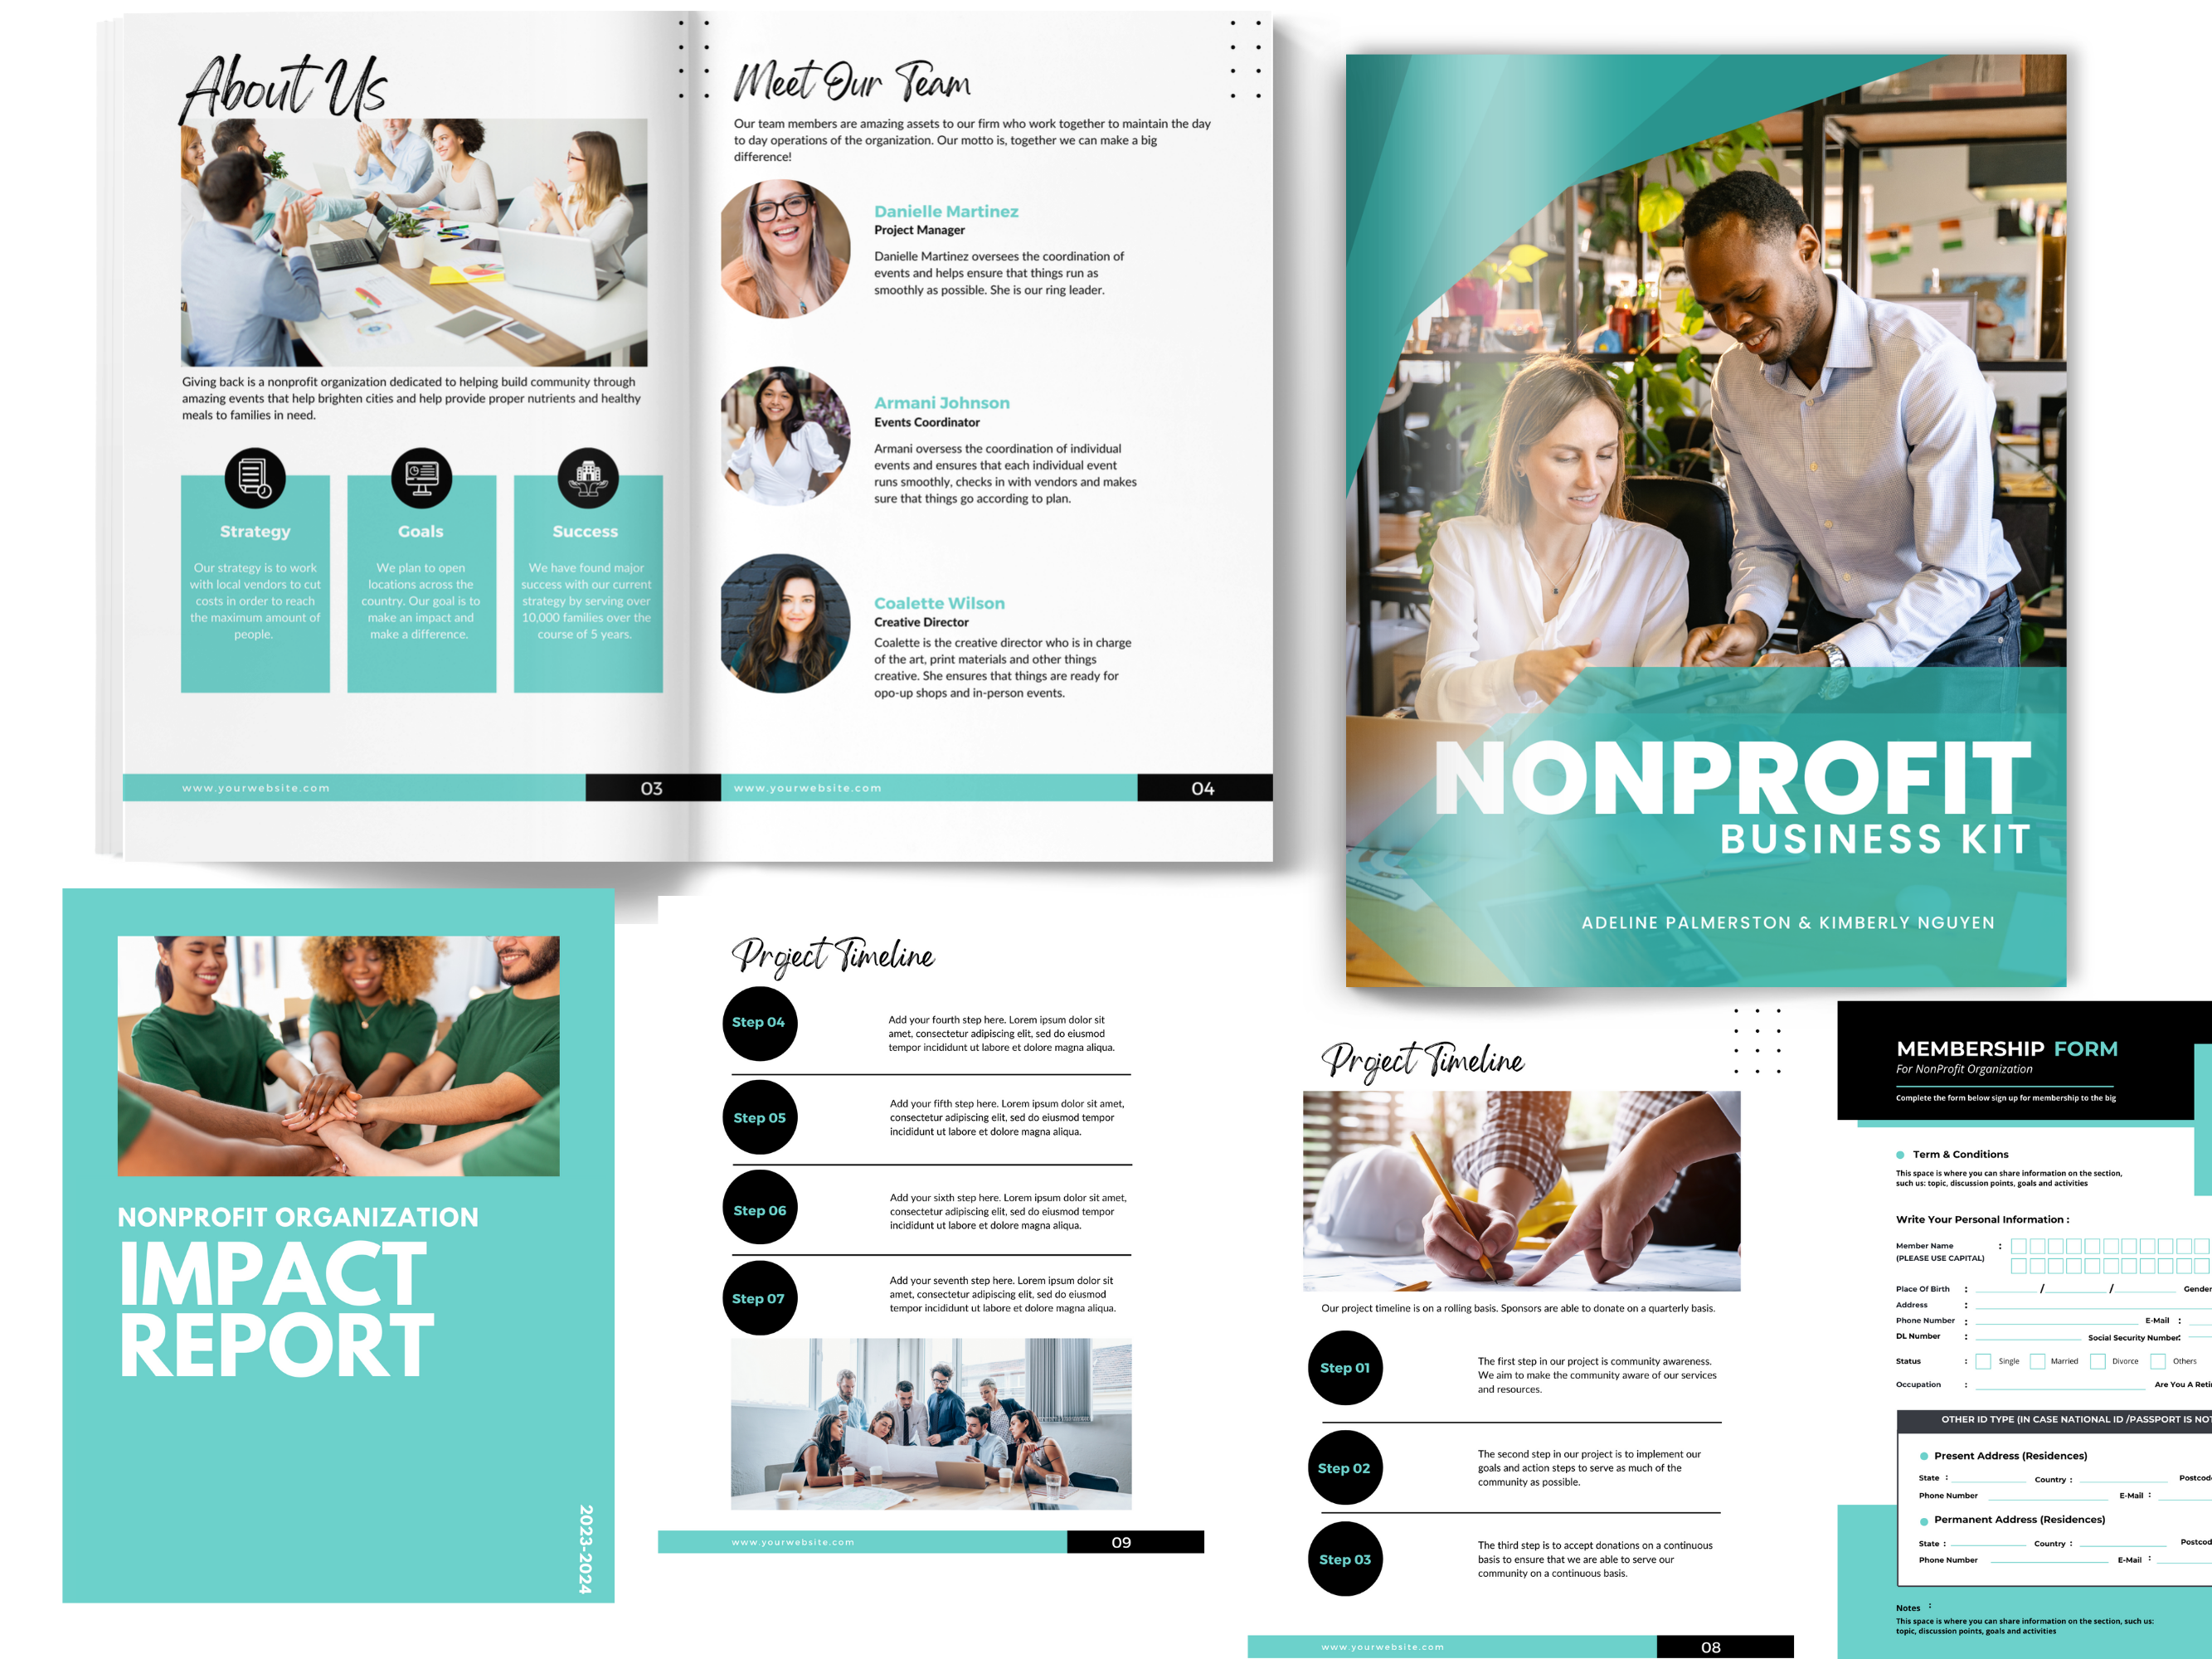 NonProfit Start Up Kit